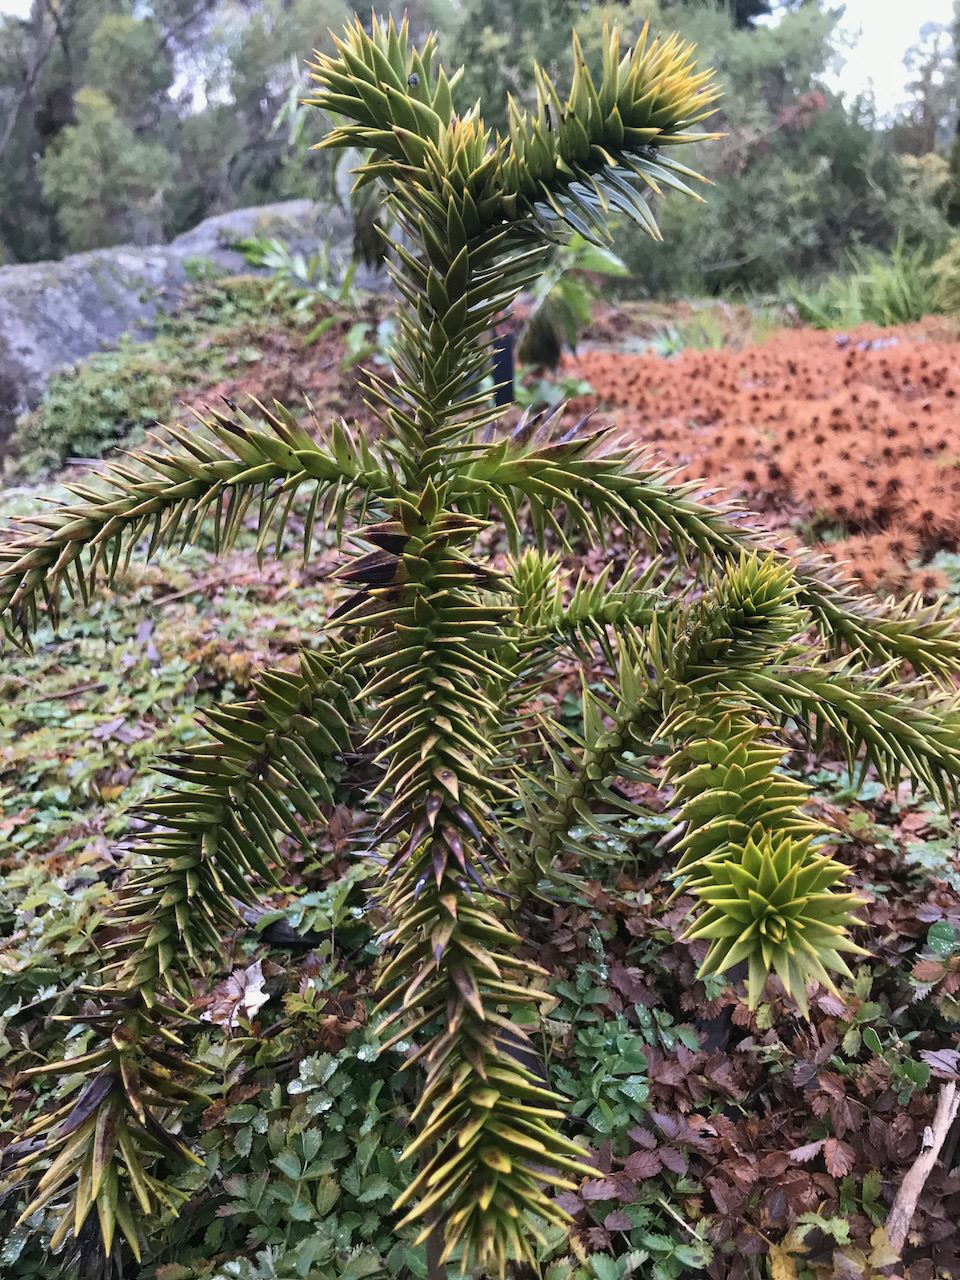 Araucaria araucana - monkey puzzle tree, Chilean pine